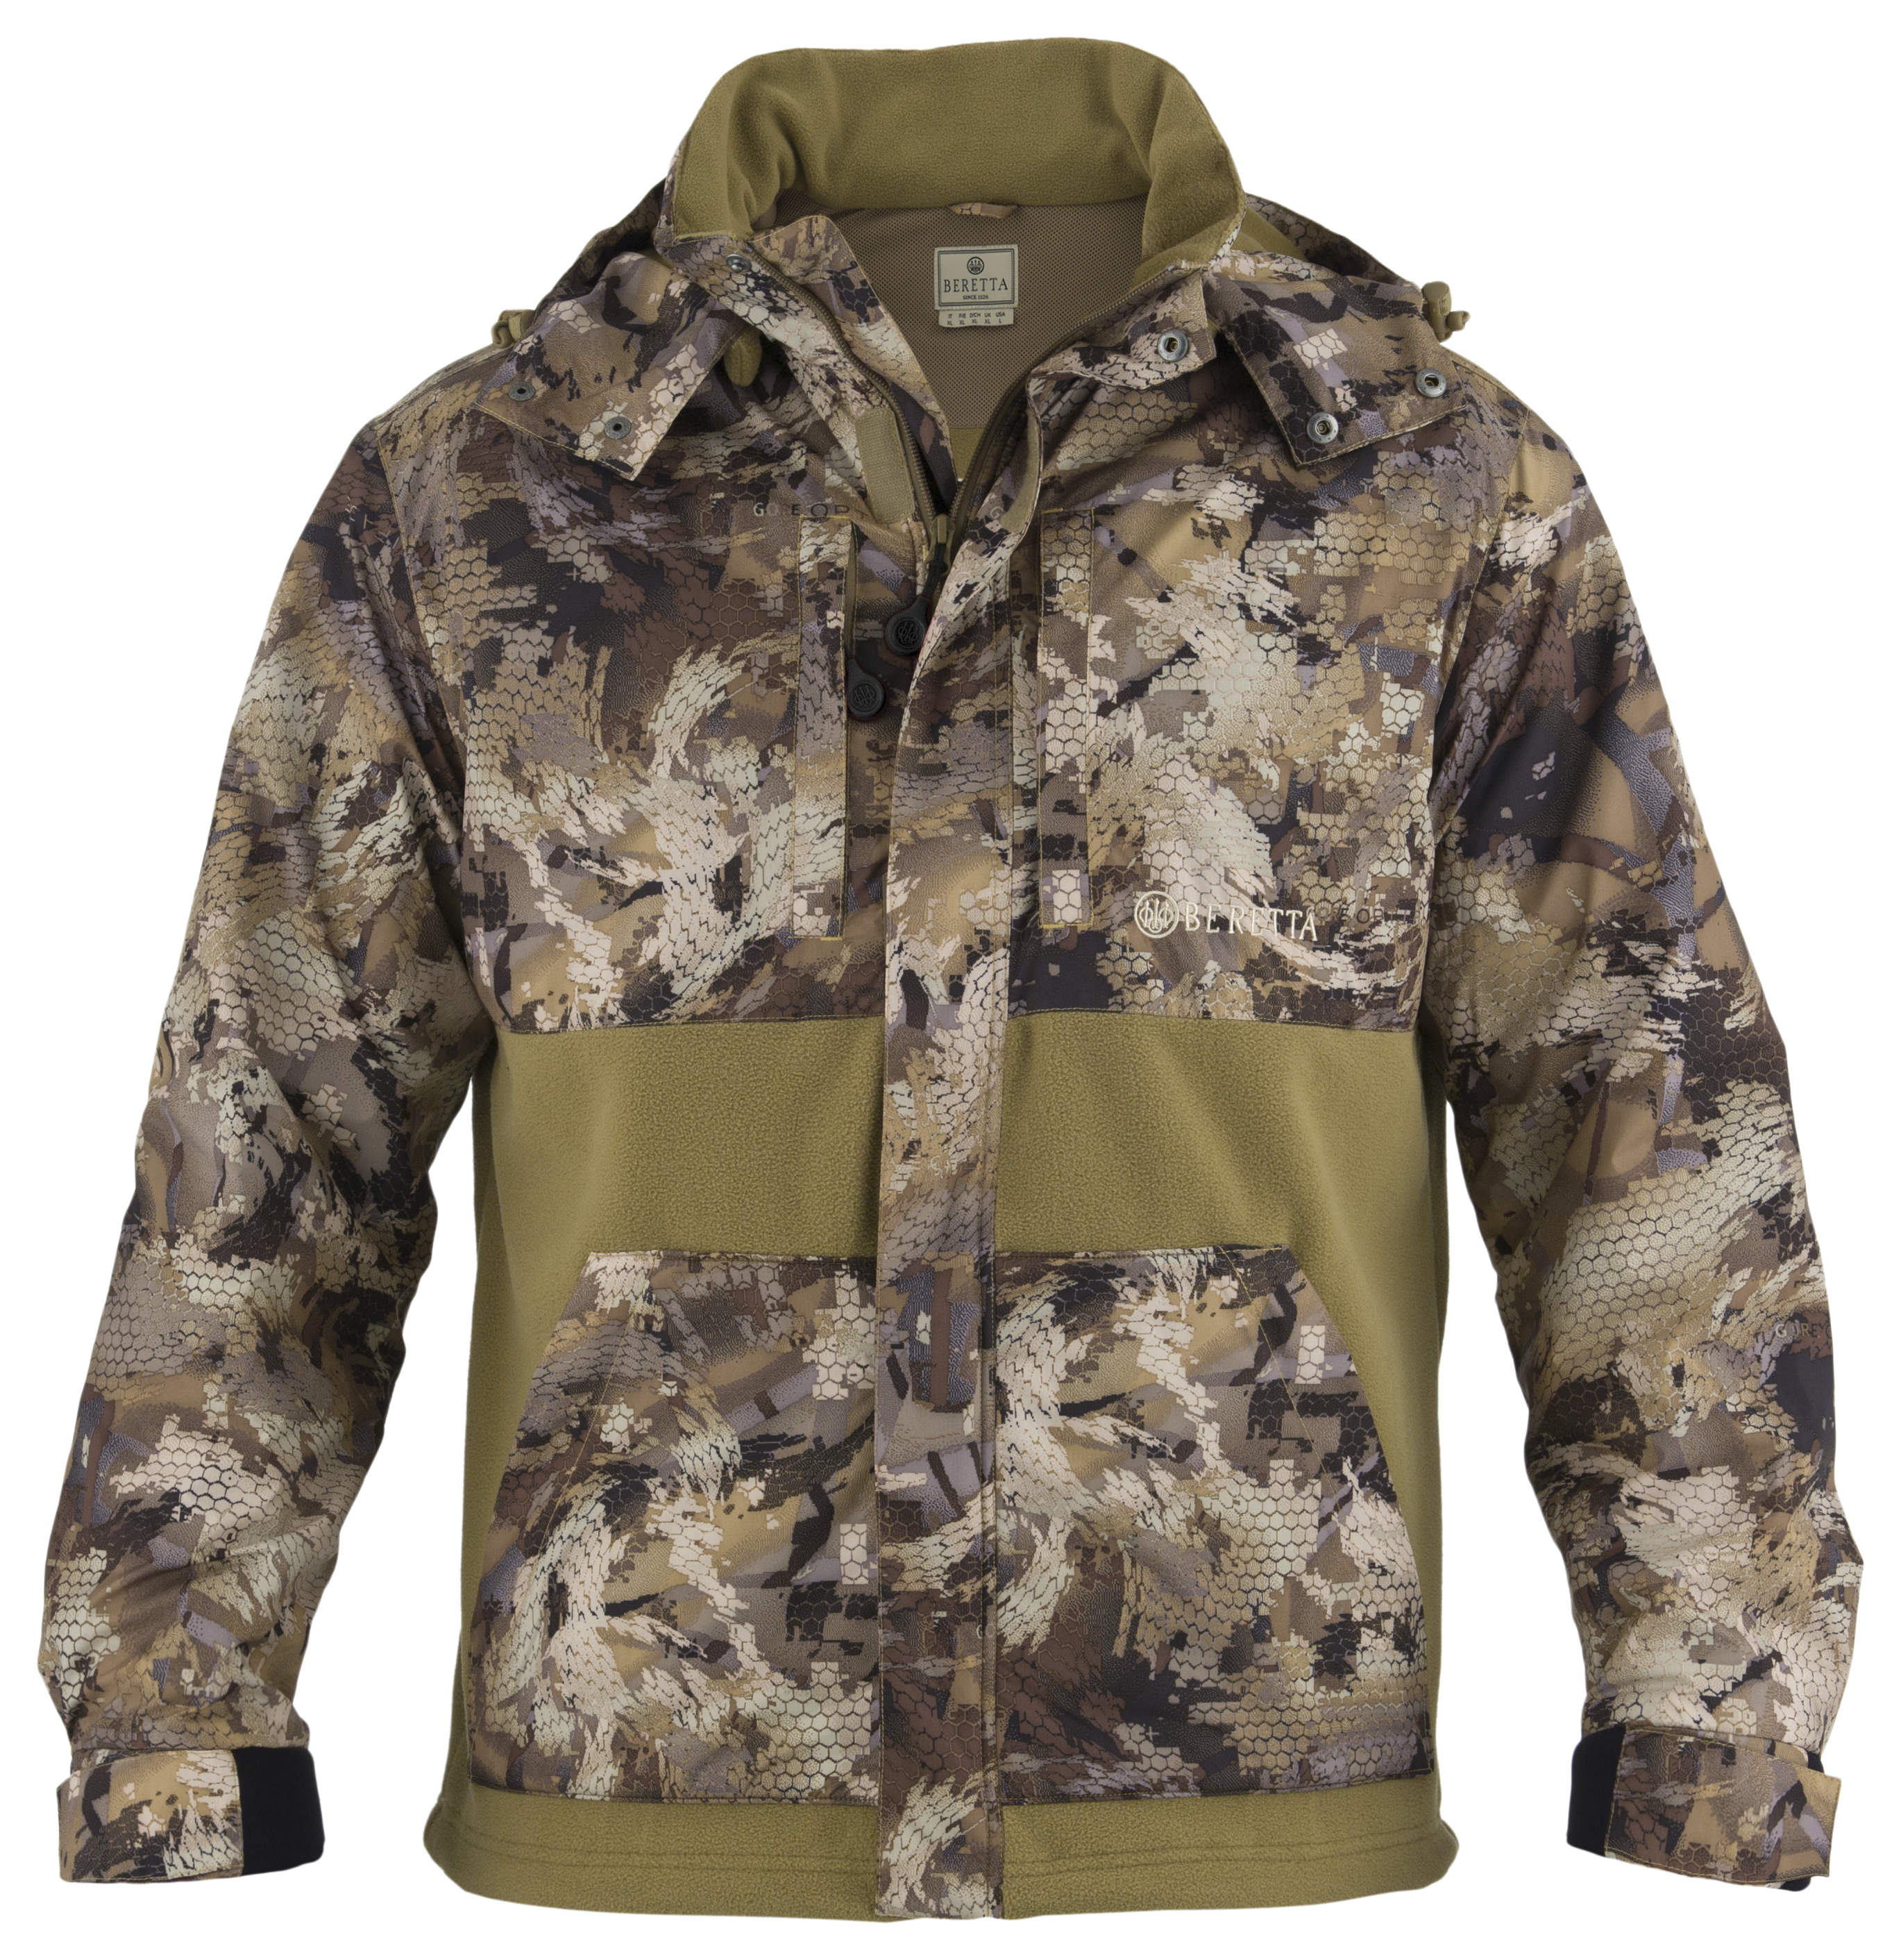  Beretta Men's Standard Waterfowl Hunting North Platte Hooded  Full Zip Jacket, Camo Realtree Max 5, Small : Sports & Outdoors